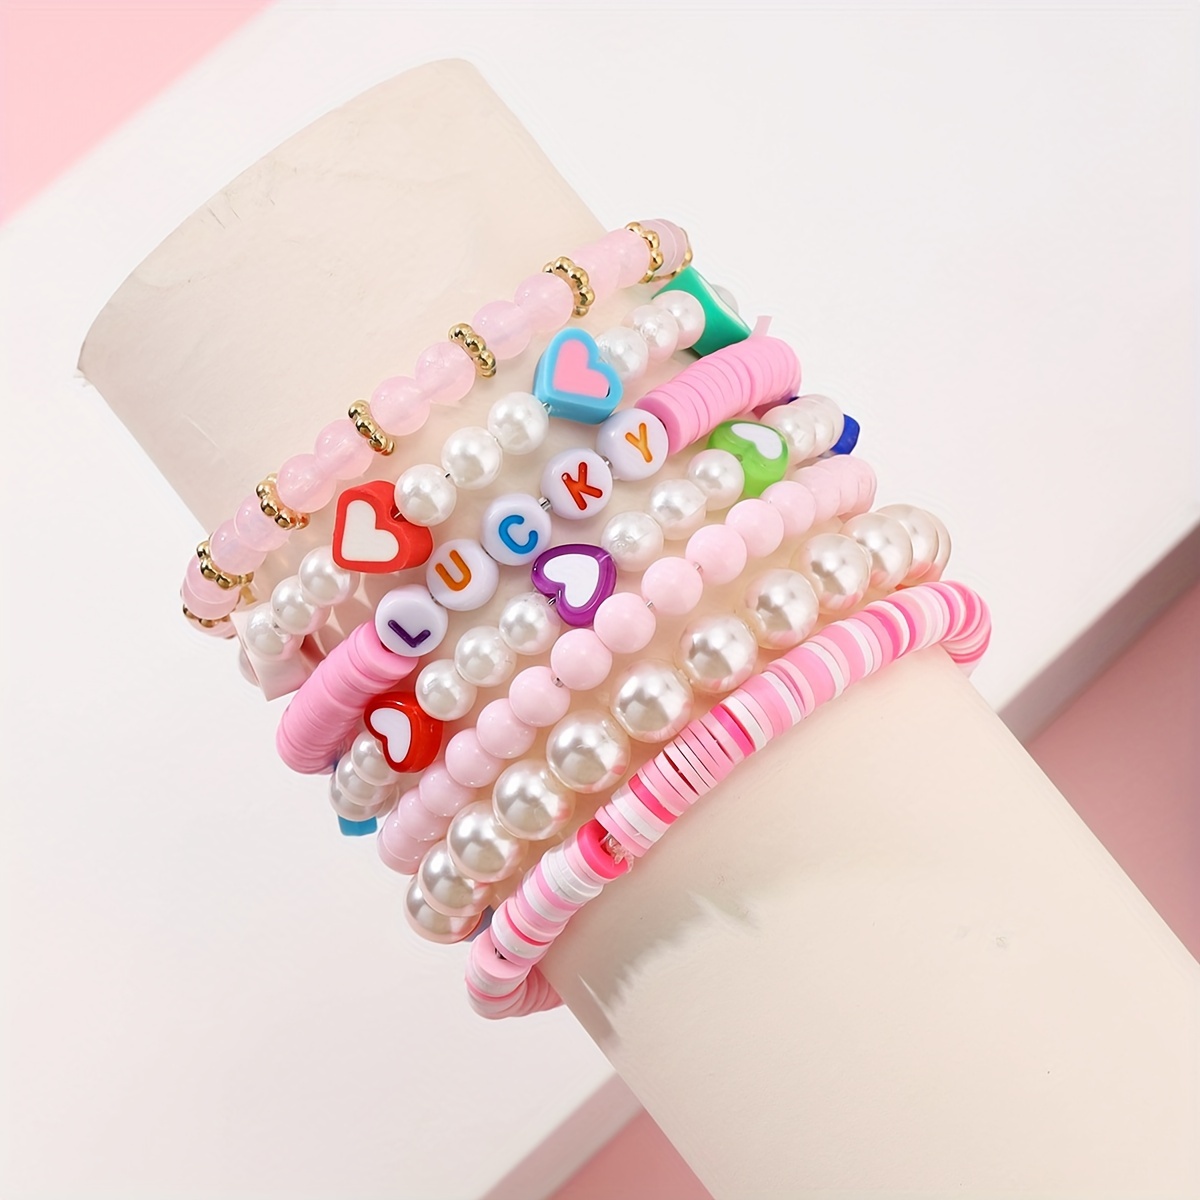 5Pcs/Set Boho Colorful Polymer Clay Elastic Chain Bracelet Women Summer  Vintage String Beads Bangles Wrist Hand Couple Jewelry